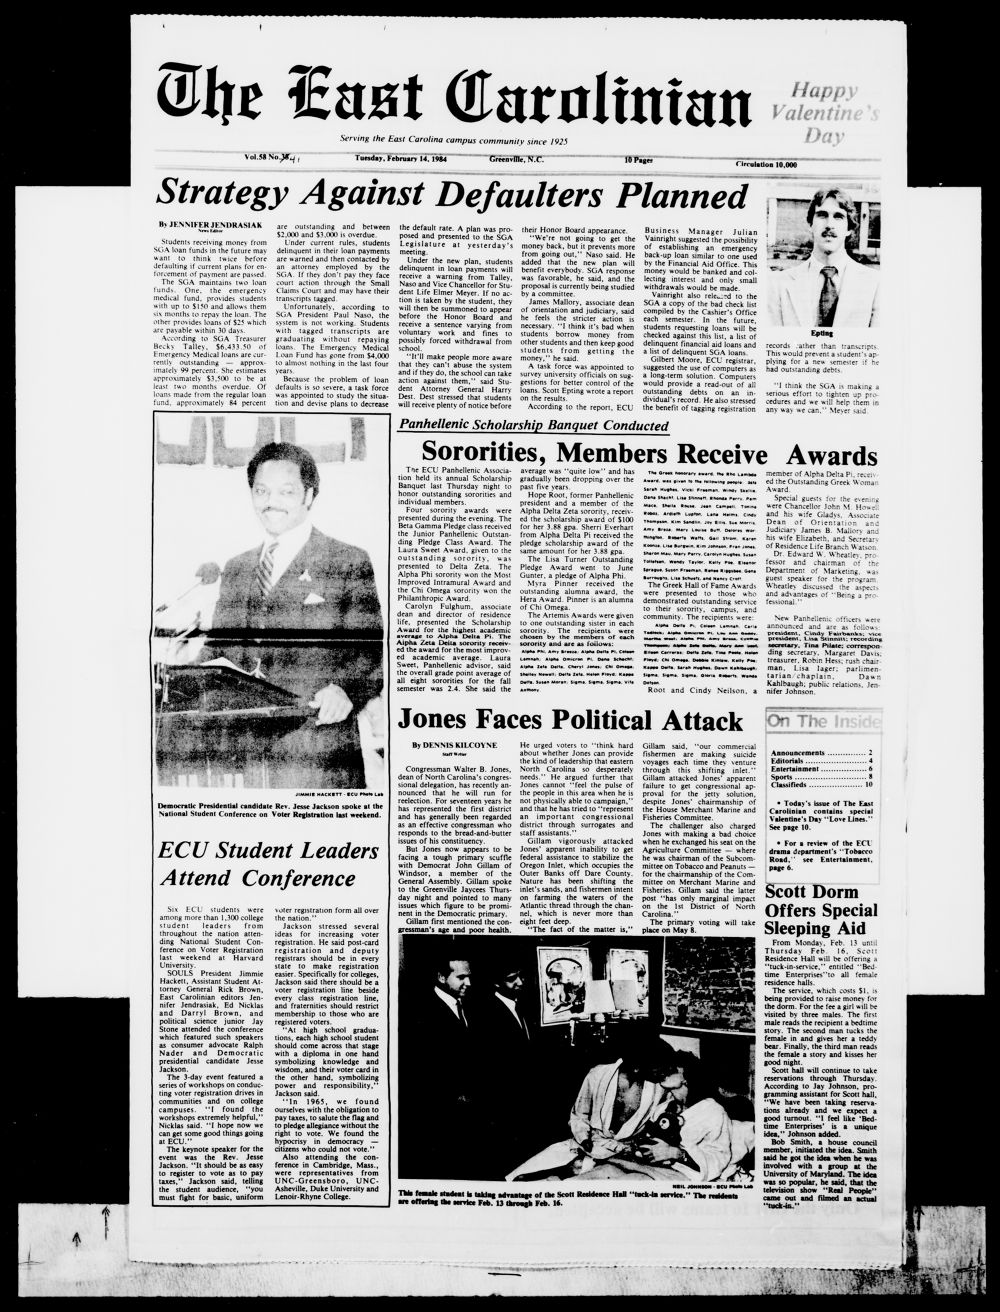 The East Carolinian, February 14, 1984 pic image